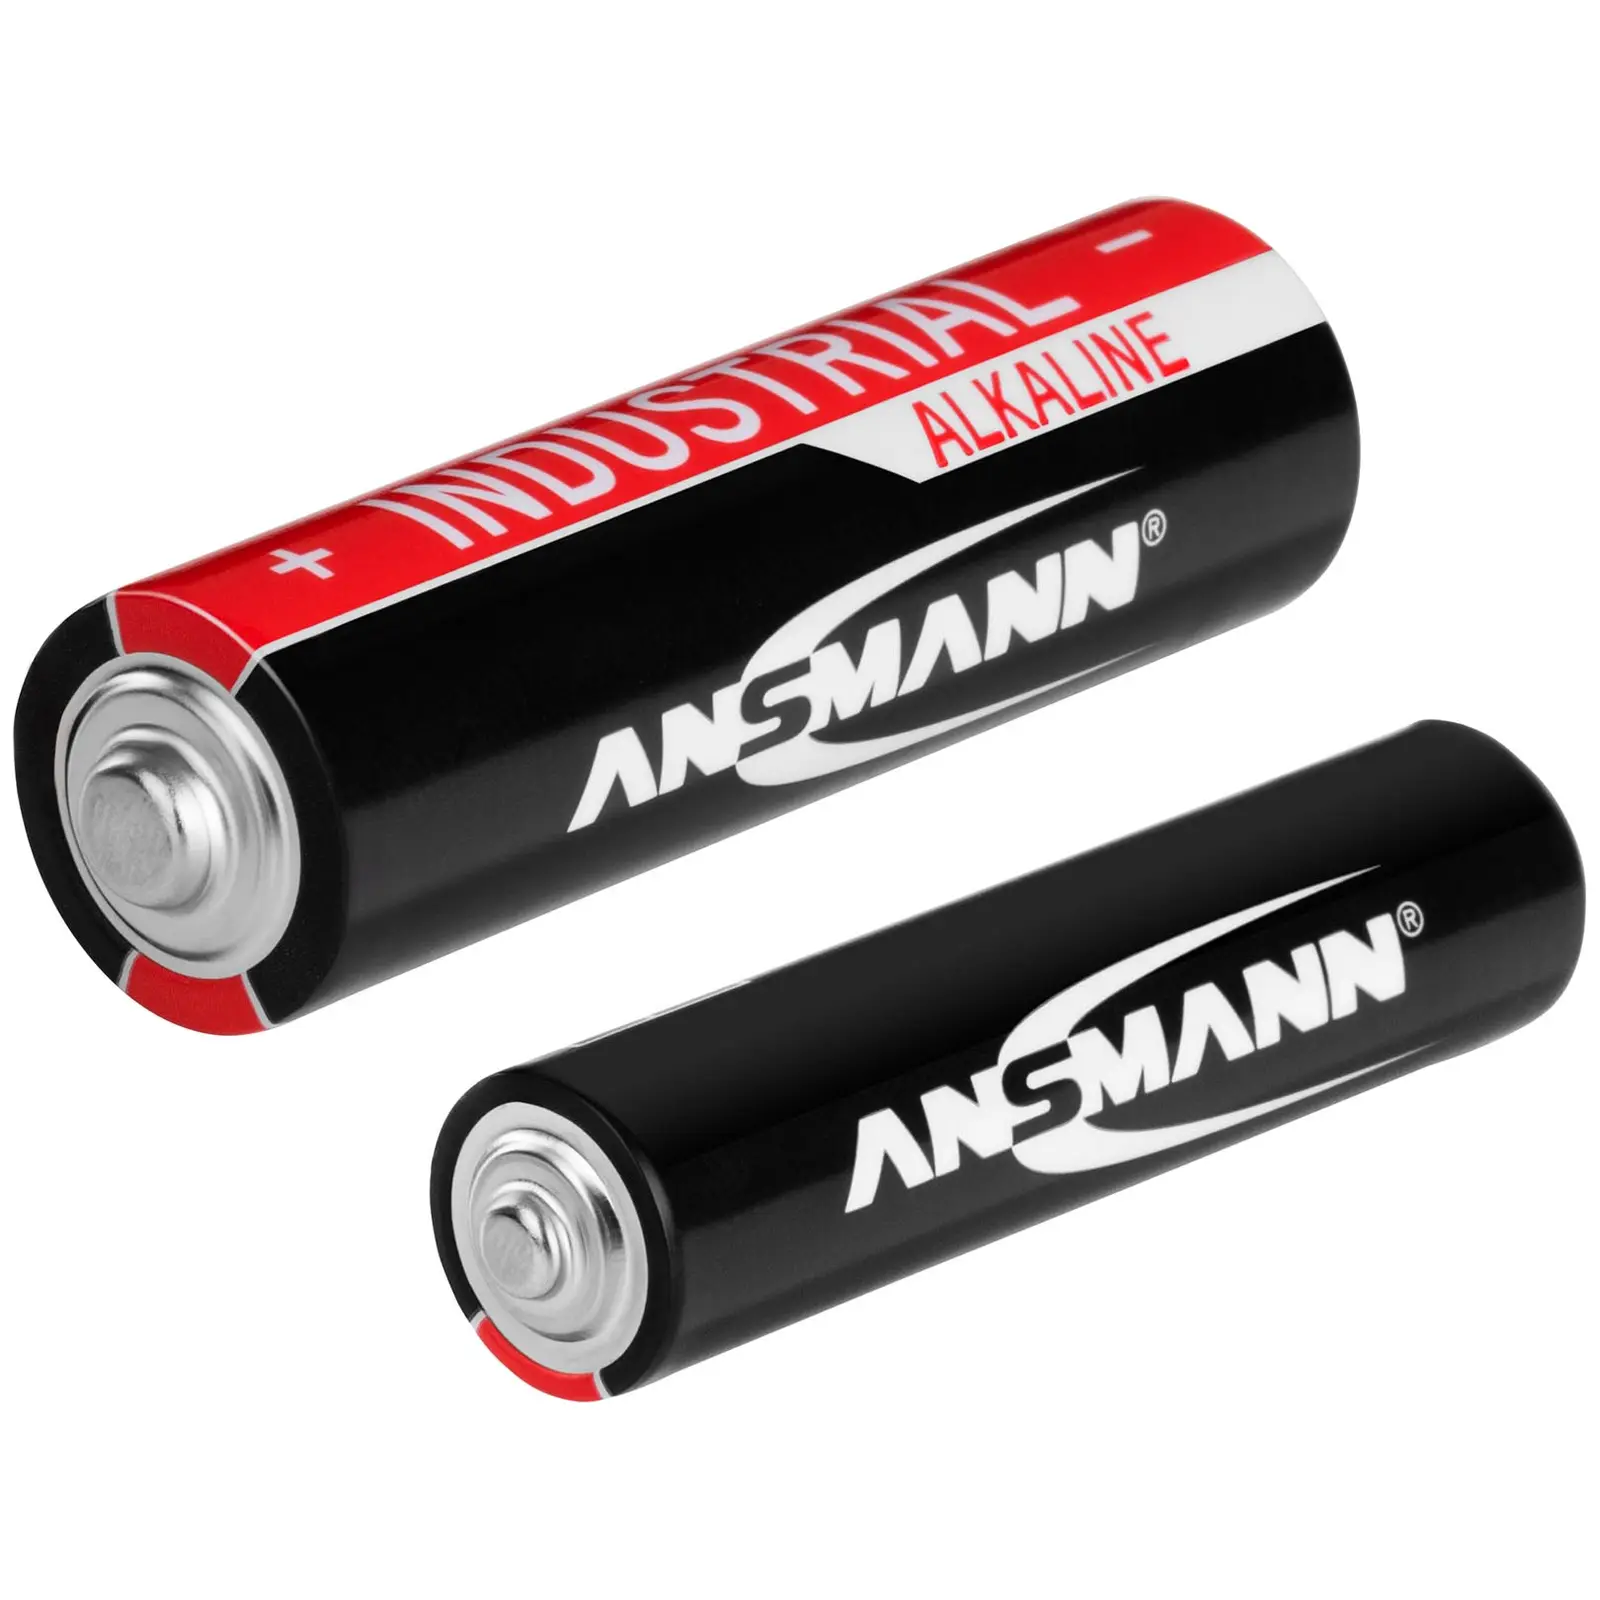 Zestaw Baterie przemysłowe - alkaliczne - AAA LR03 - 100 szt. + AA LR06 - 100 szt.